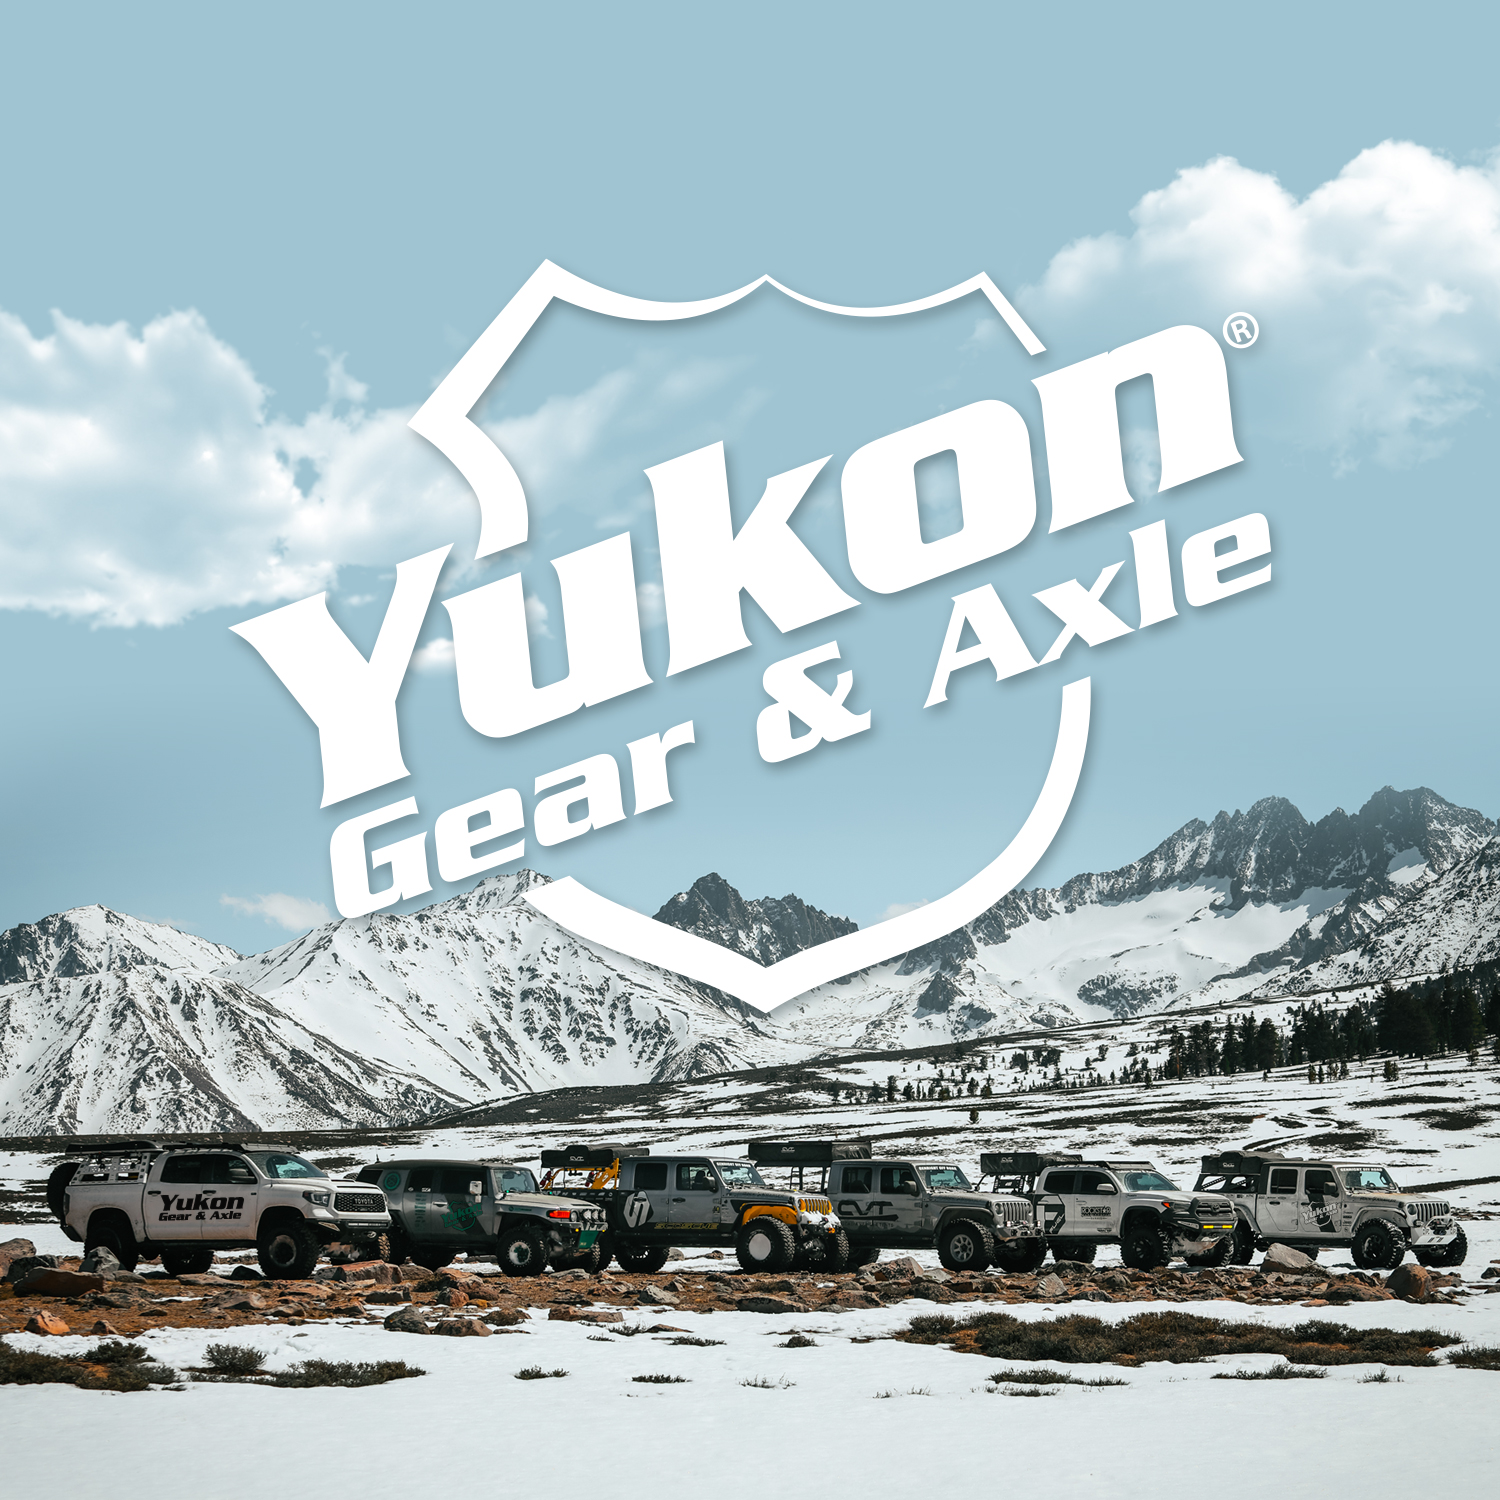 Yukon Minor install kit for Dana 80 differential (4.375" O.D. pinion race) 